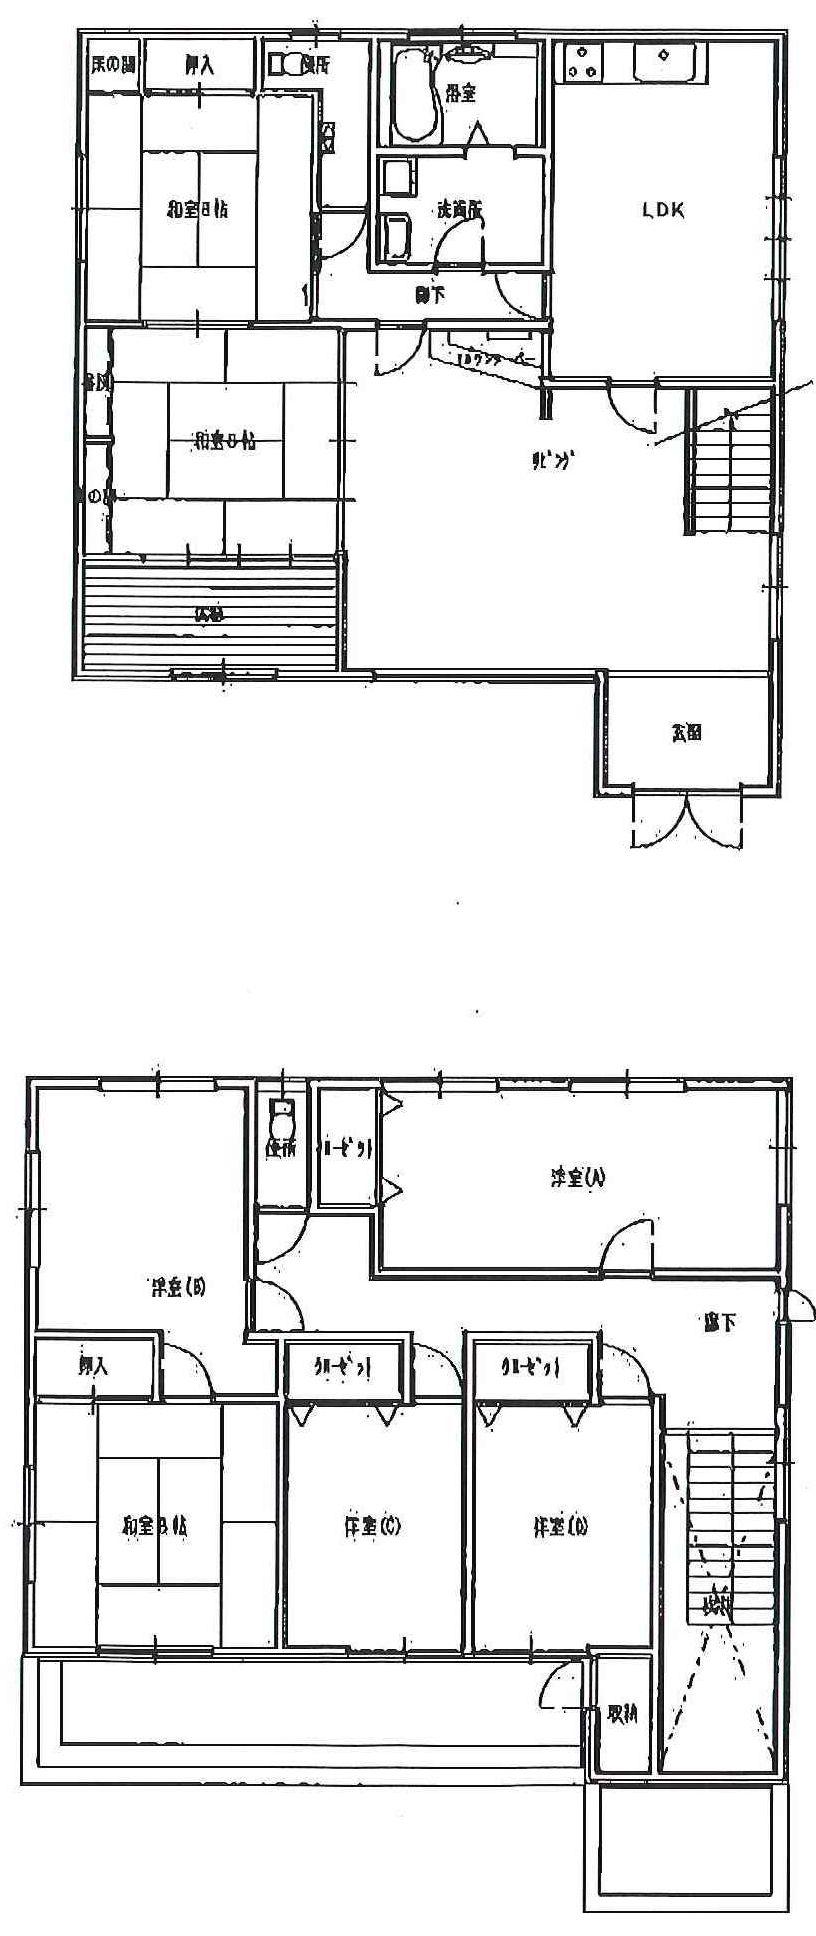 Floor plan. 23.8 million yen, 8LDDKK + S (storeroom), Land area 251.24 sq m , Building area 220.02 sq m